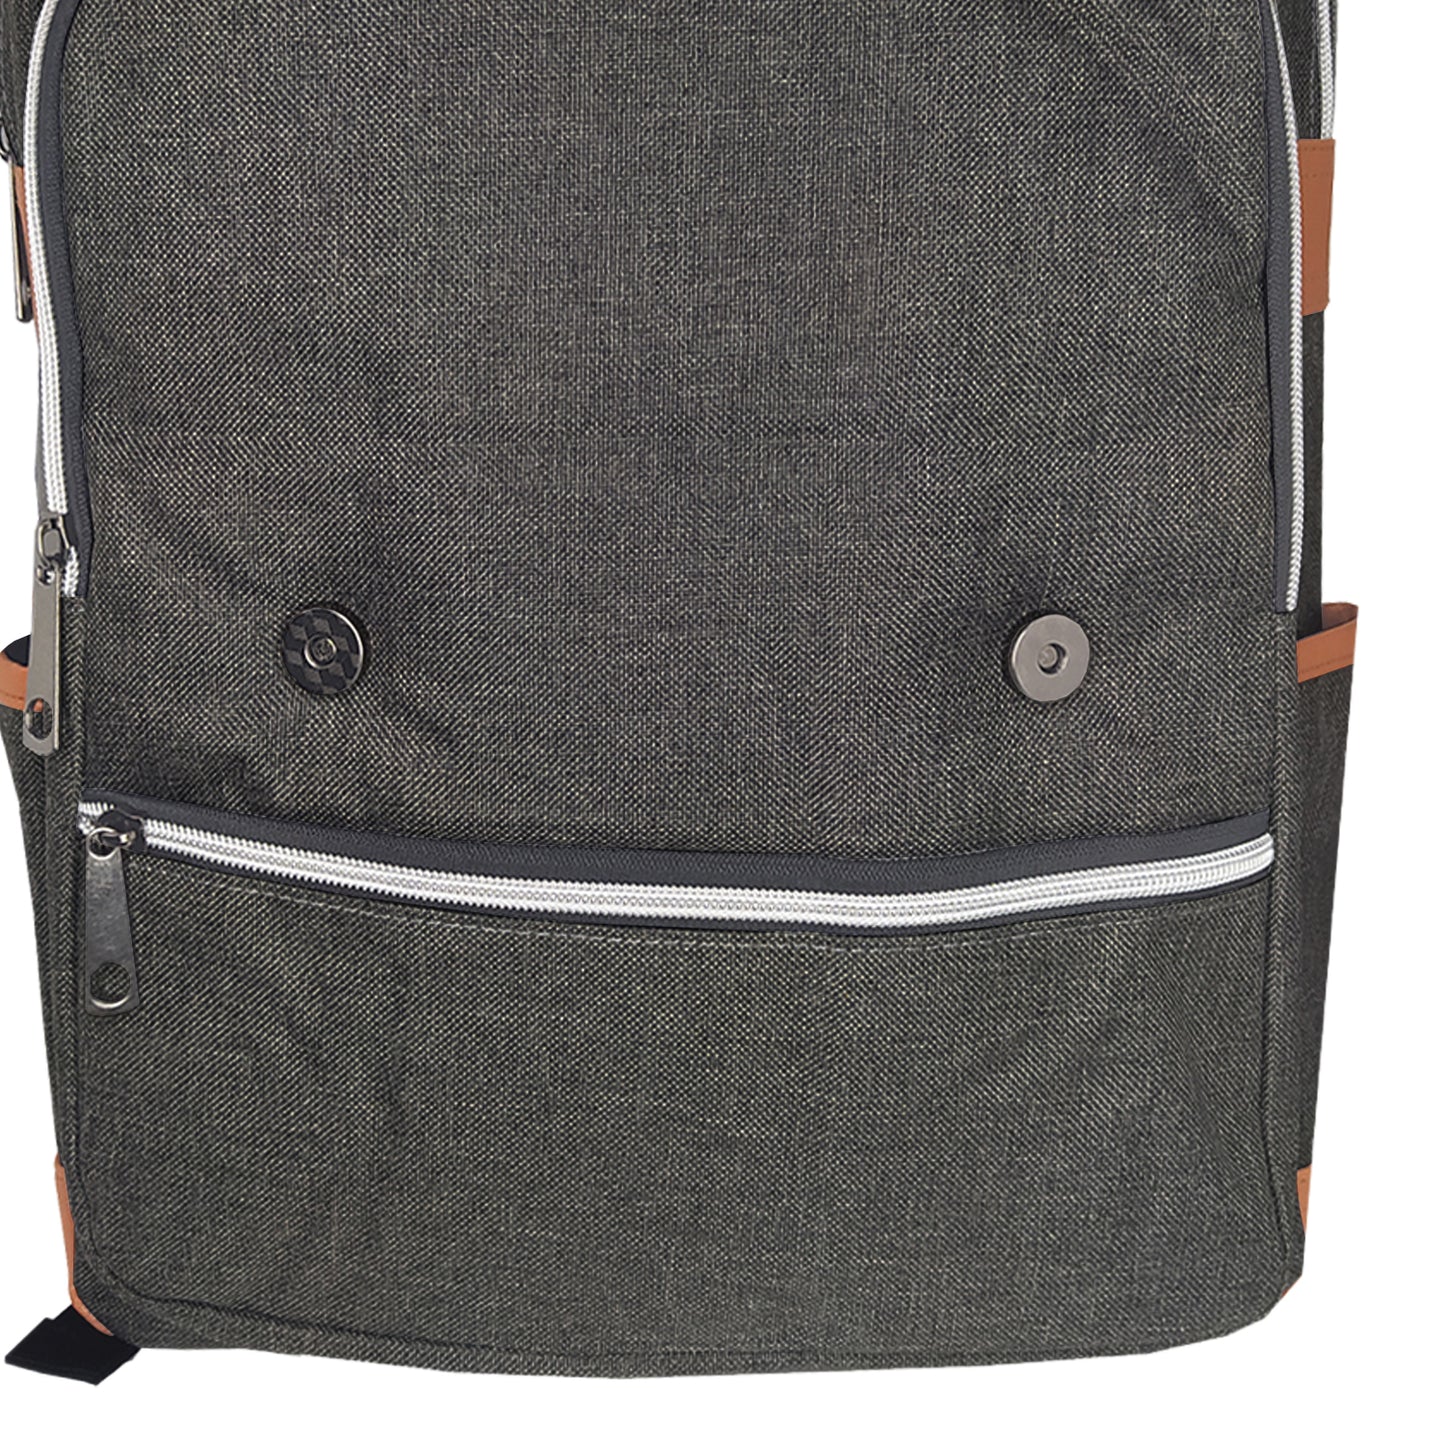 Charcoal Backpack 2233 CHARCOAL